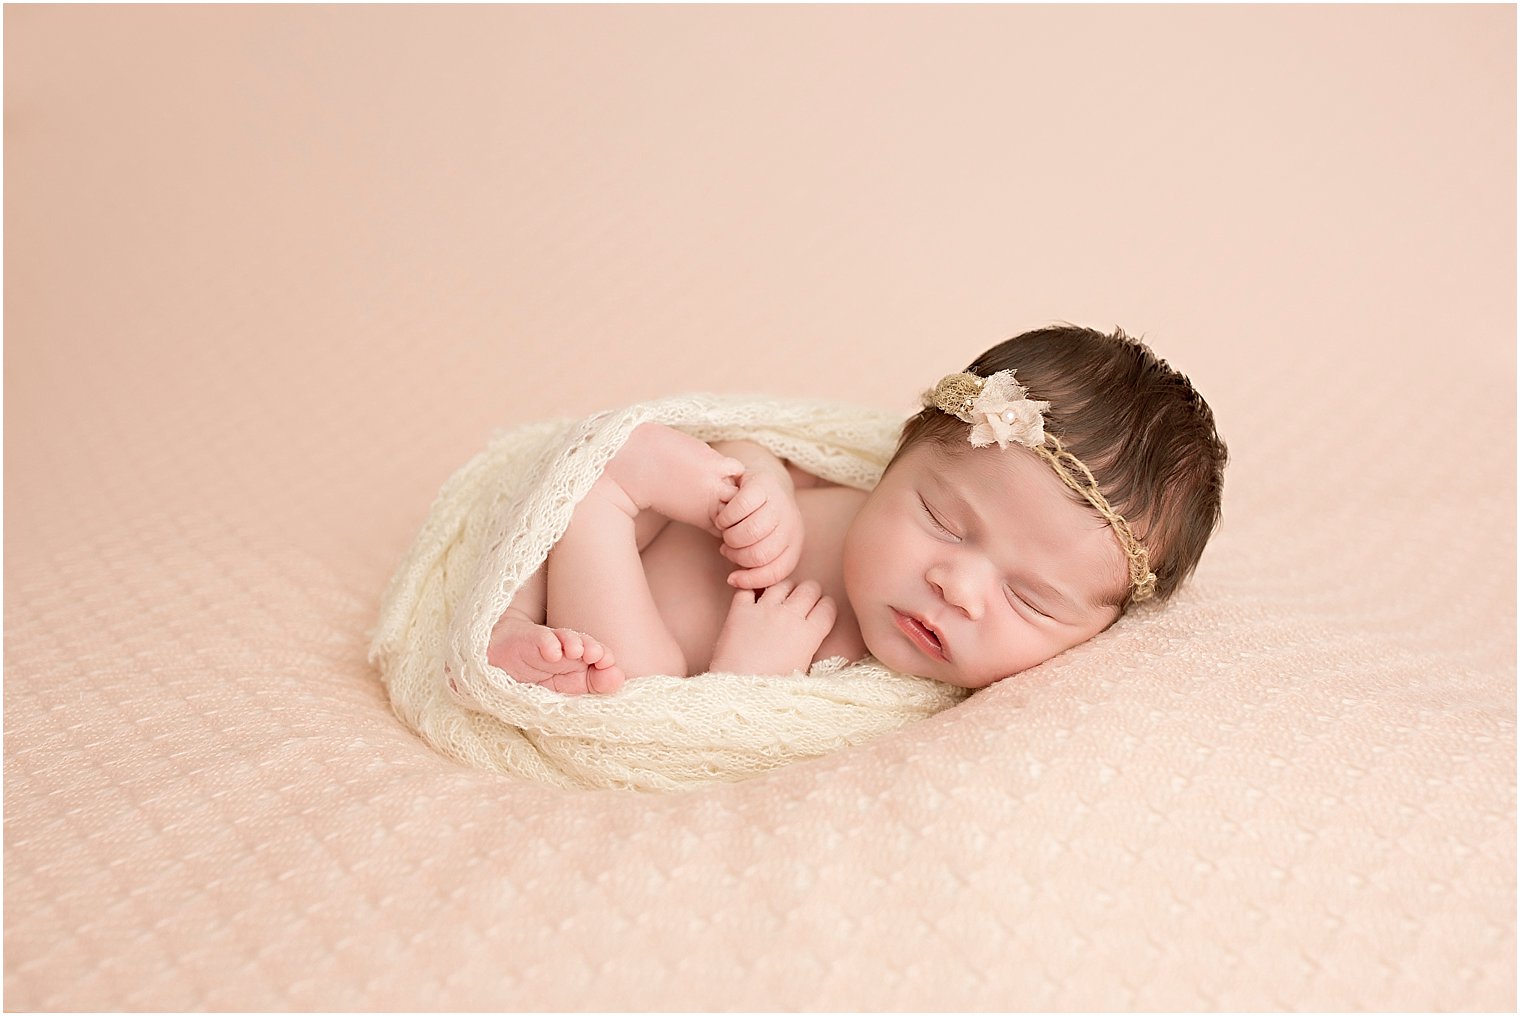 Newborn girl in pink and cream